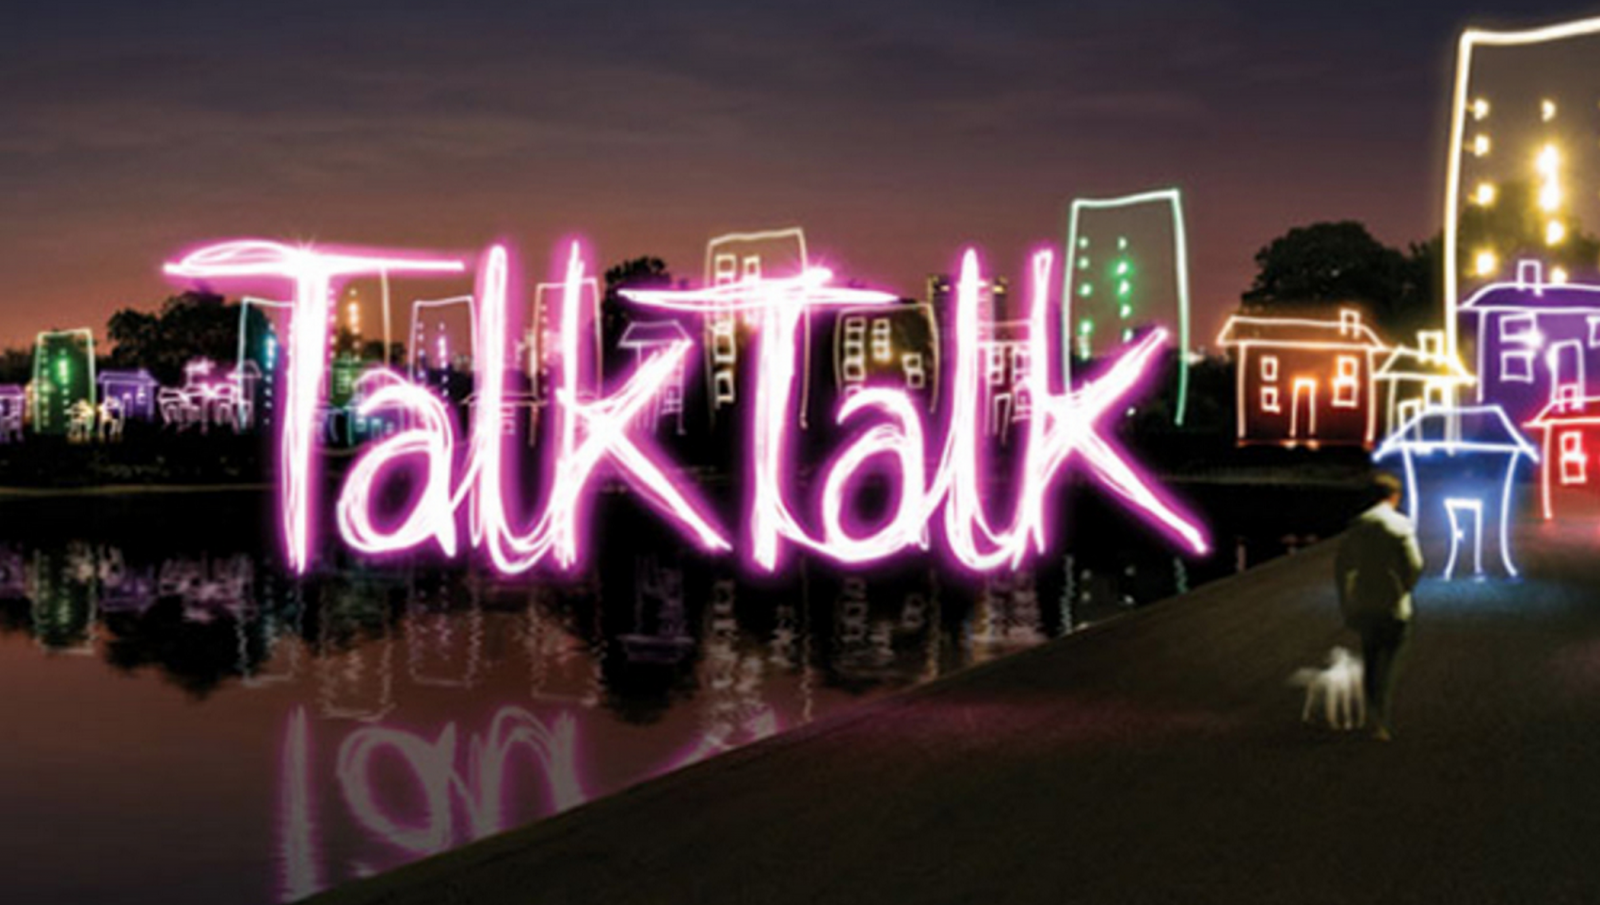 TalkTalk hack halves profits, but CEO hails how telco has ‘bounced back strongly’